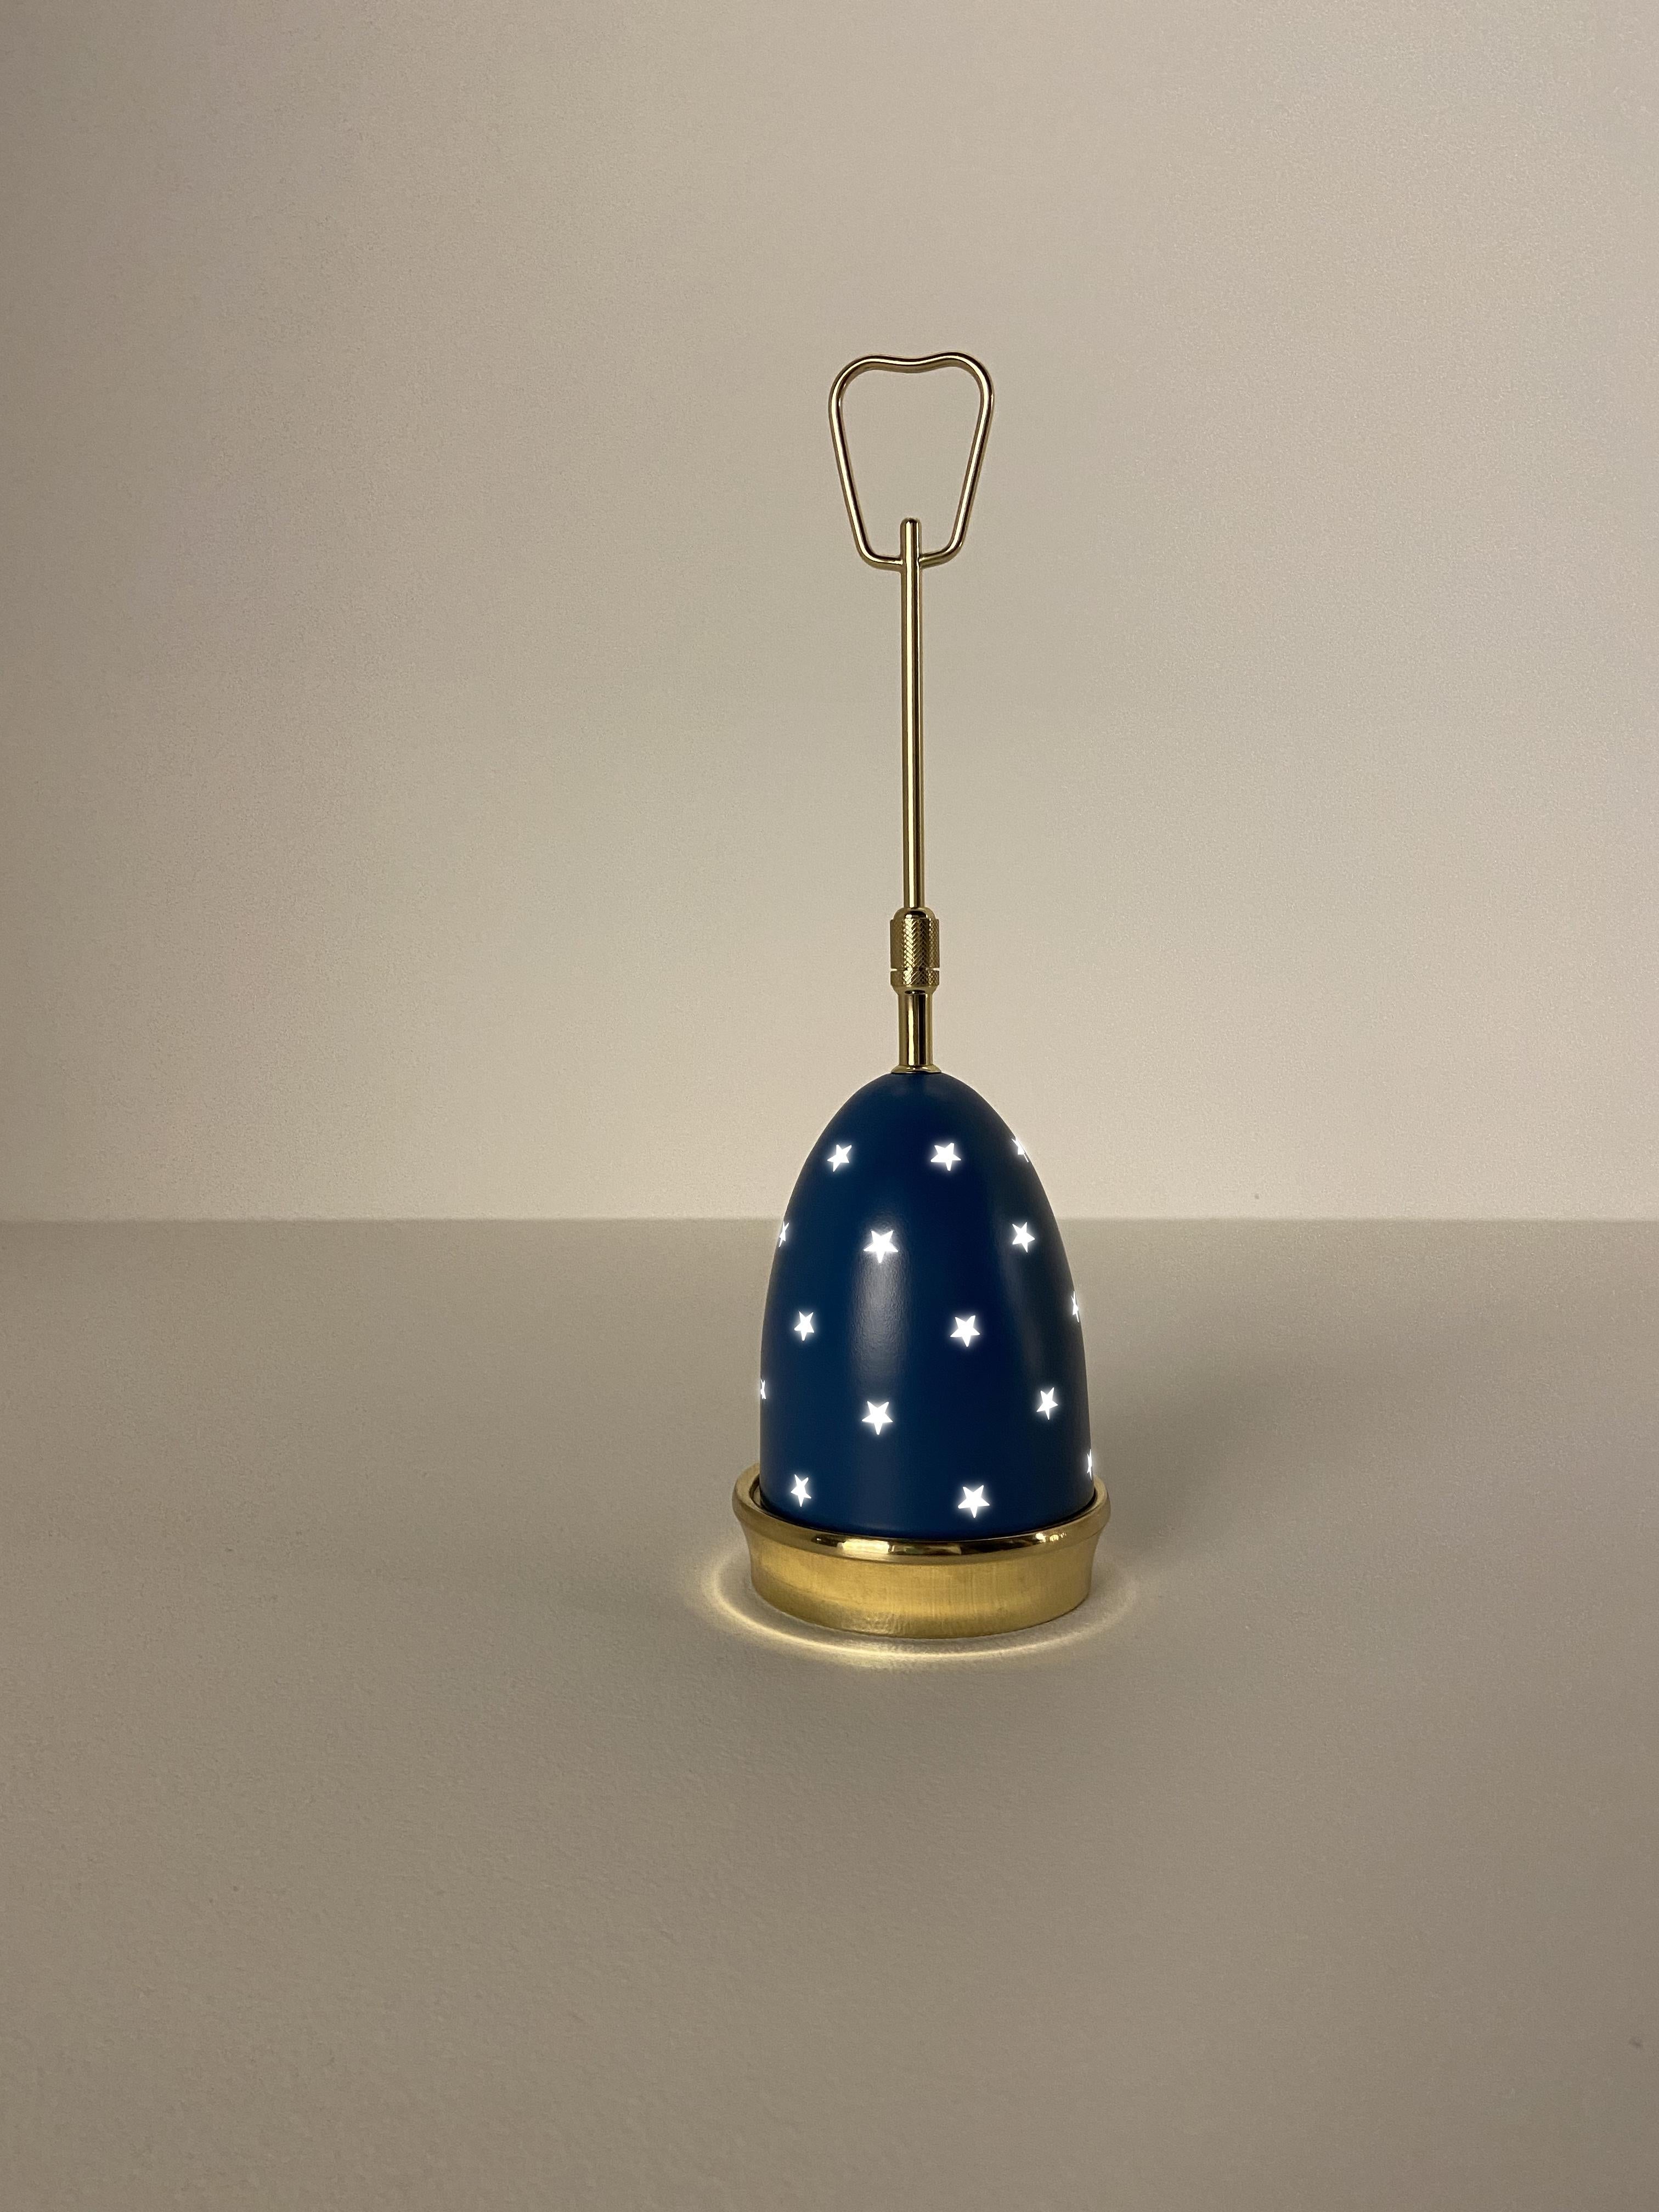 Mid-Century Modern 21st Century Blue Stellina Table Lamp Angelo Lelii 2019 Style of 1950s Italy